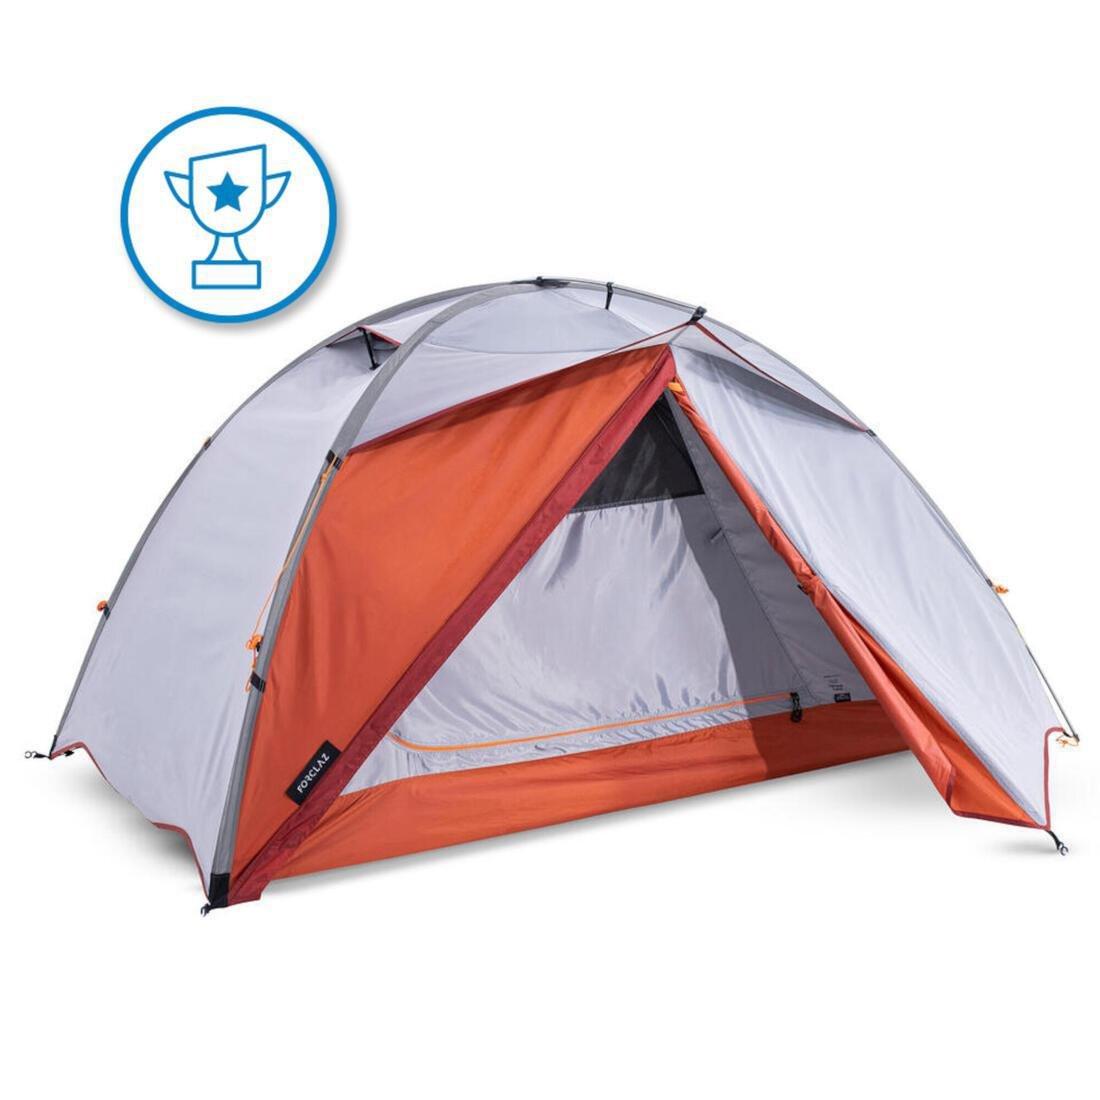 FORCLAZ - Trekking Dome Tent - 2 Person Mt500, Orange